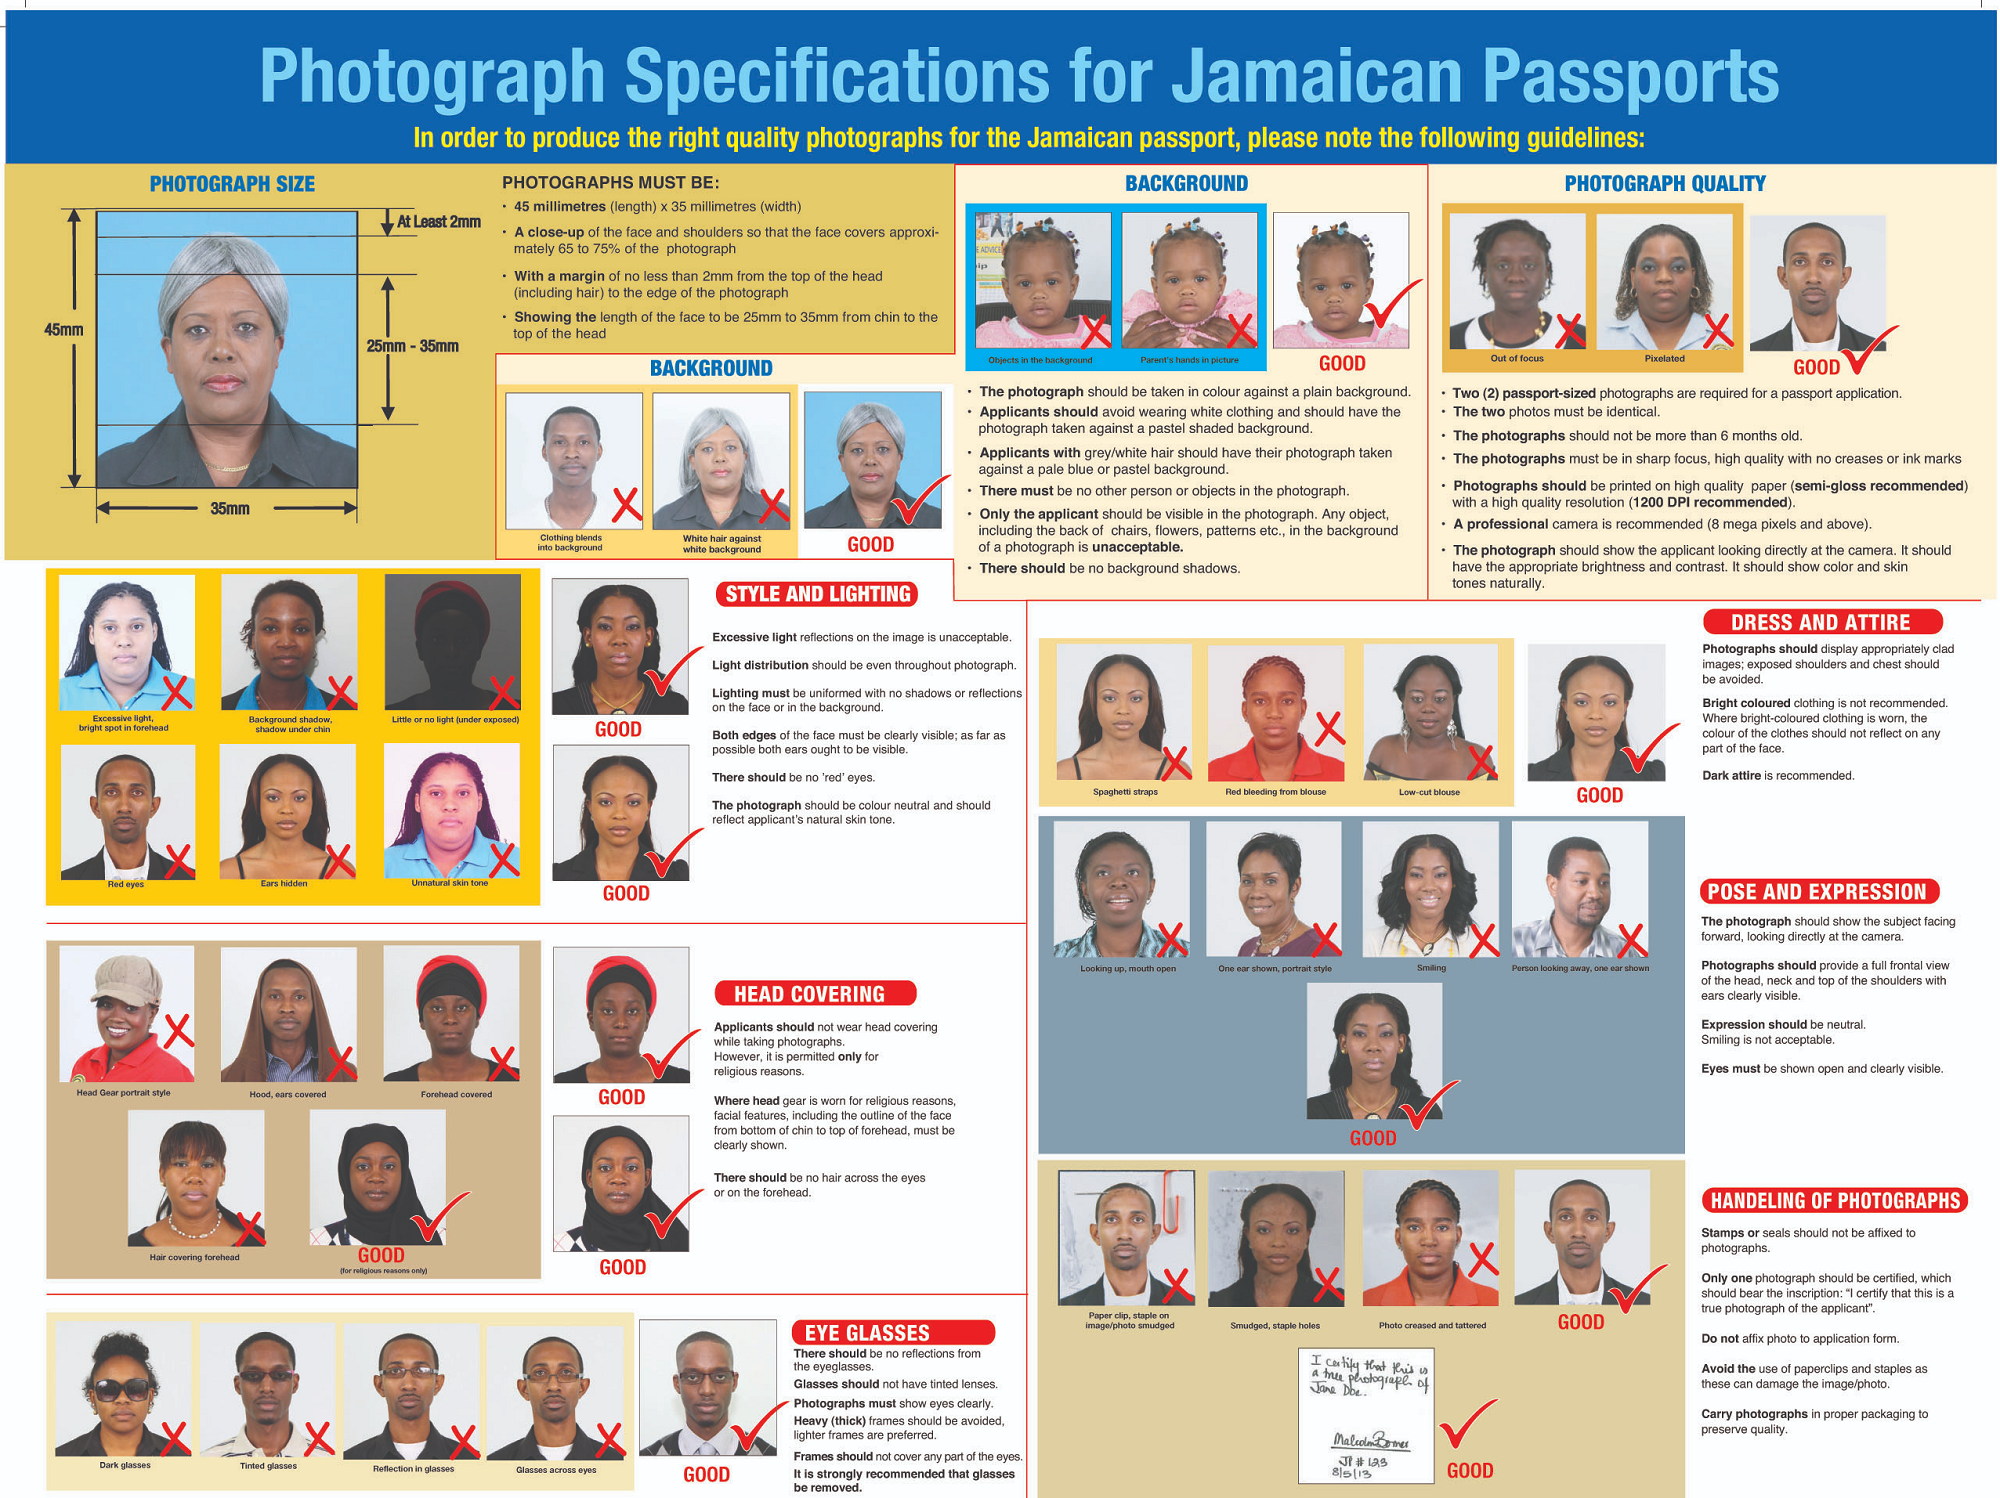 Passport Photo Requirements - Consulate General of Jamaica - New York1